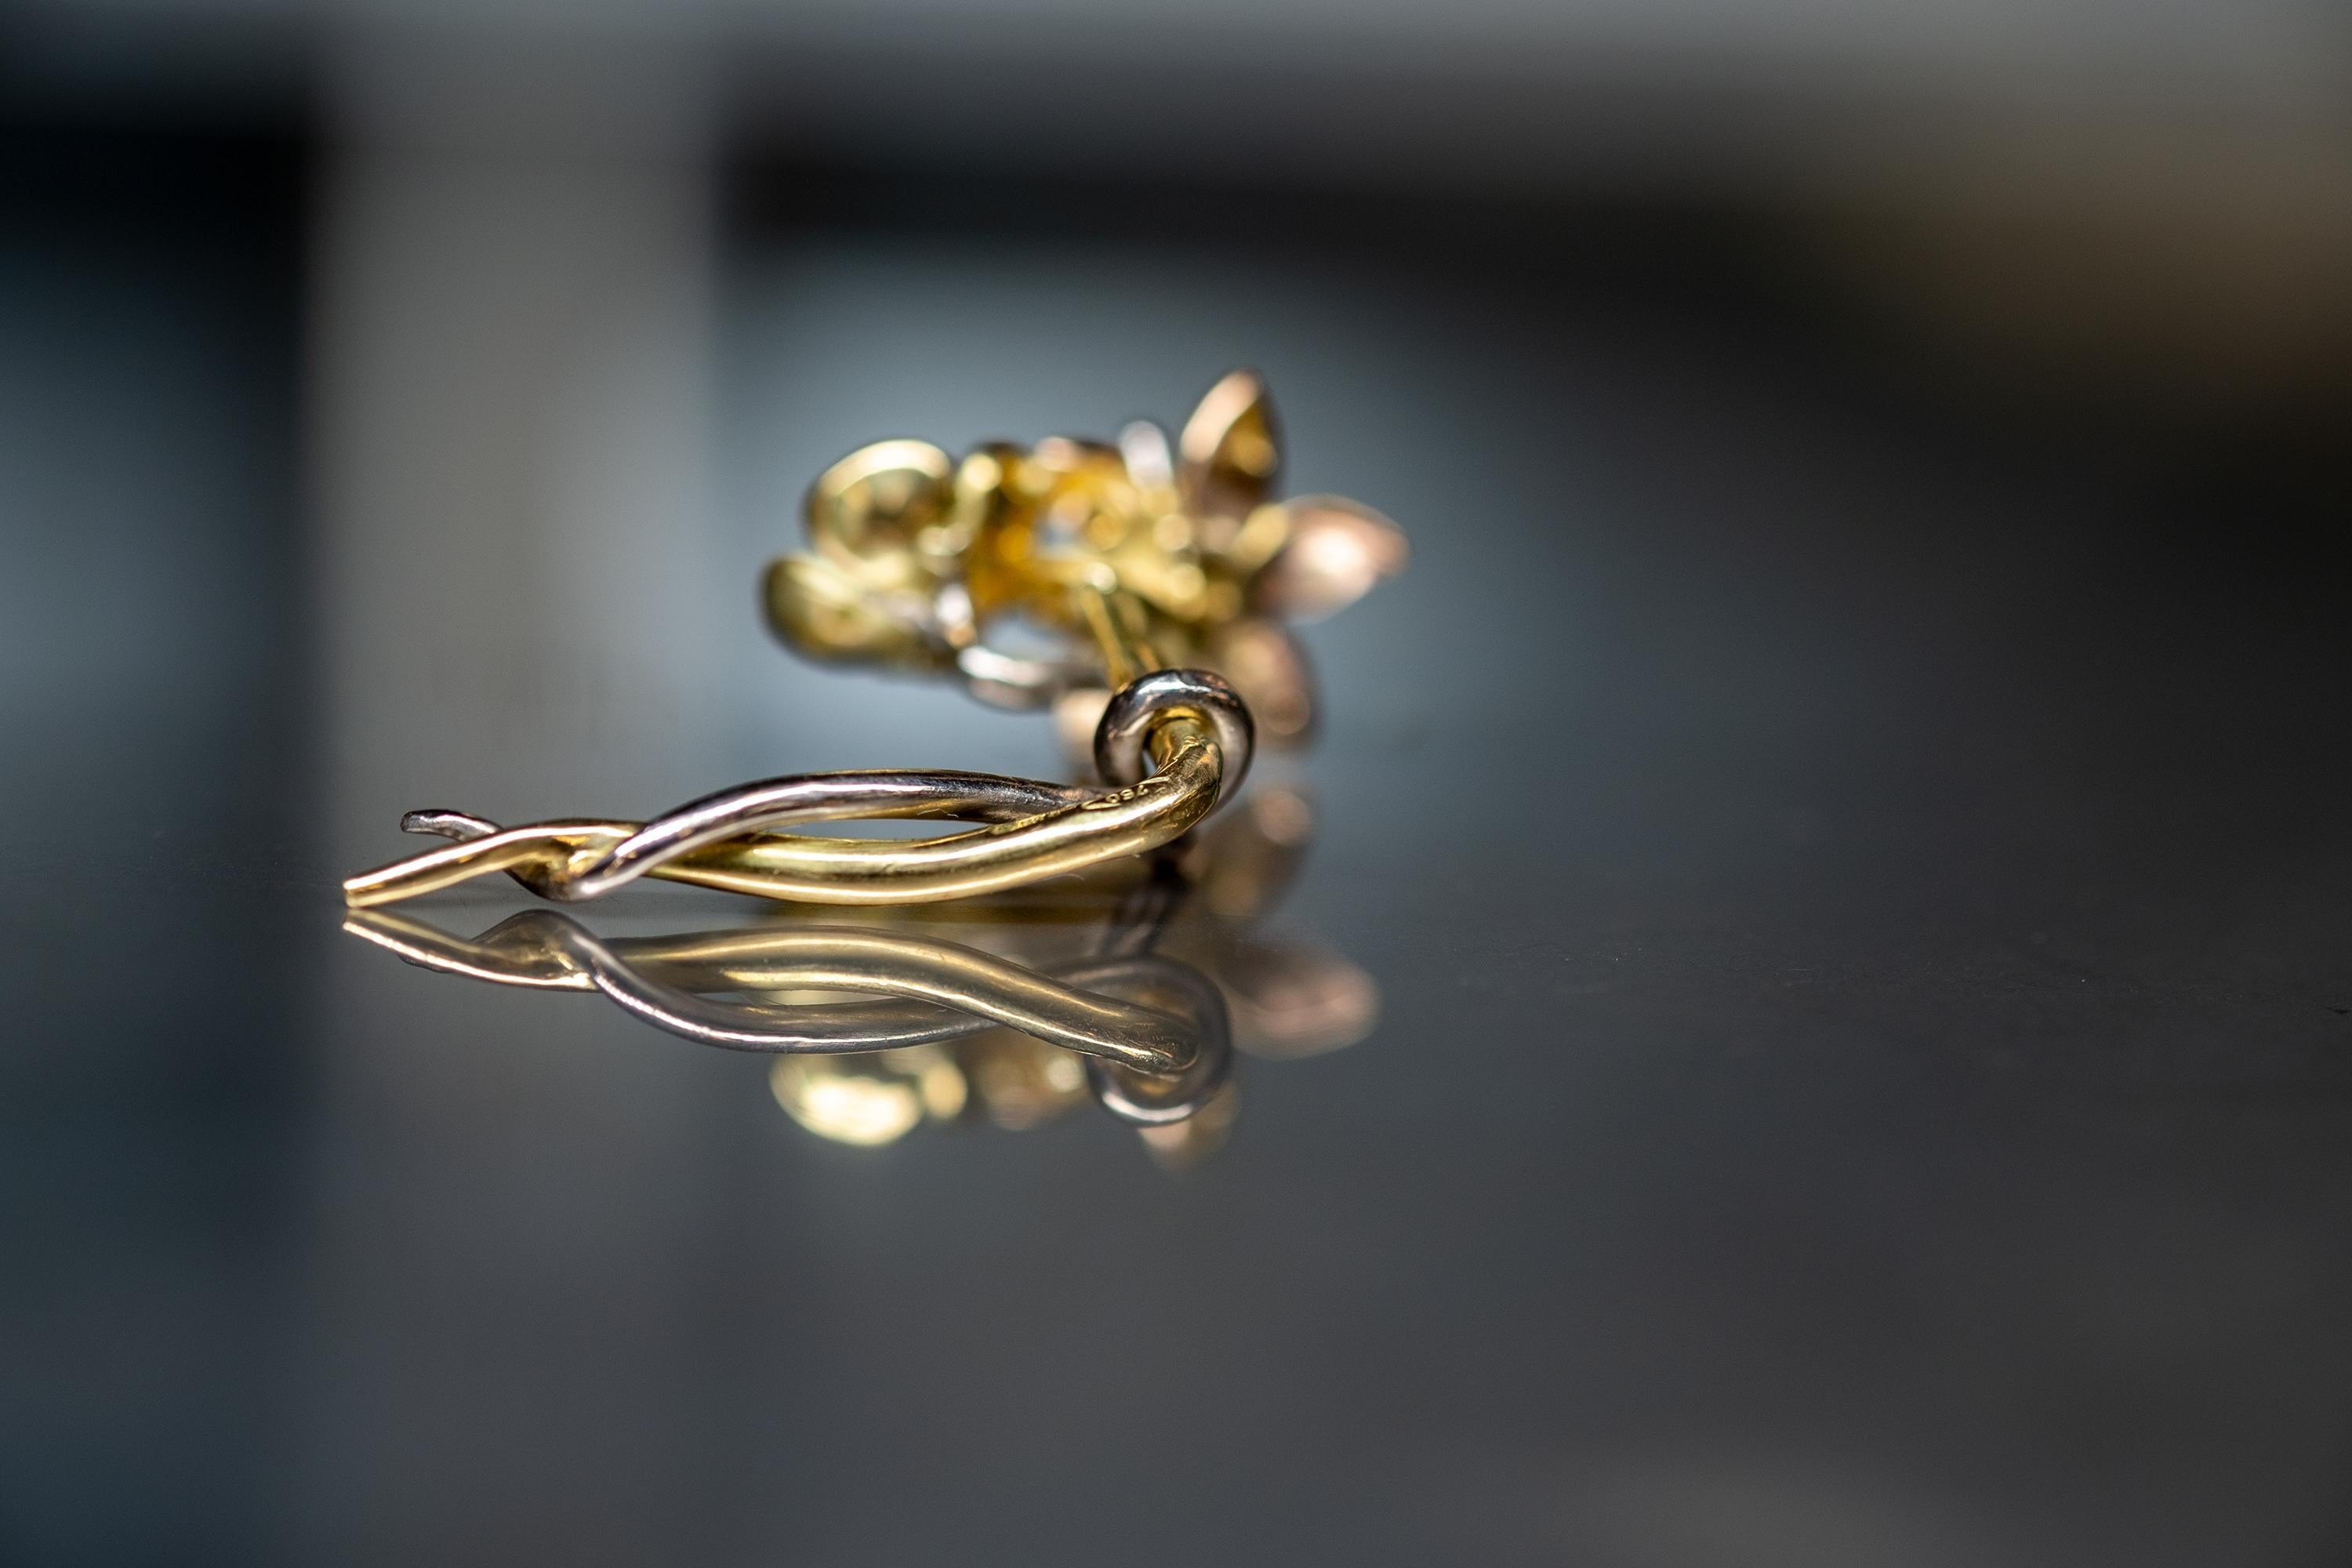 18K Fairmined Gold, Canadamark Diamonds, Handmade, Flower Earring #2 For Sale 3